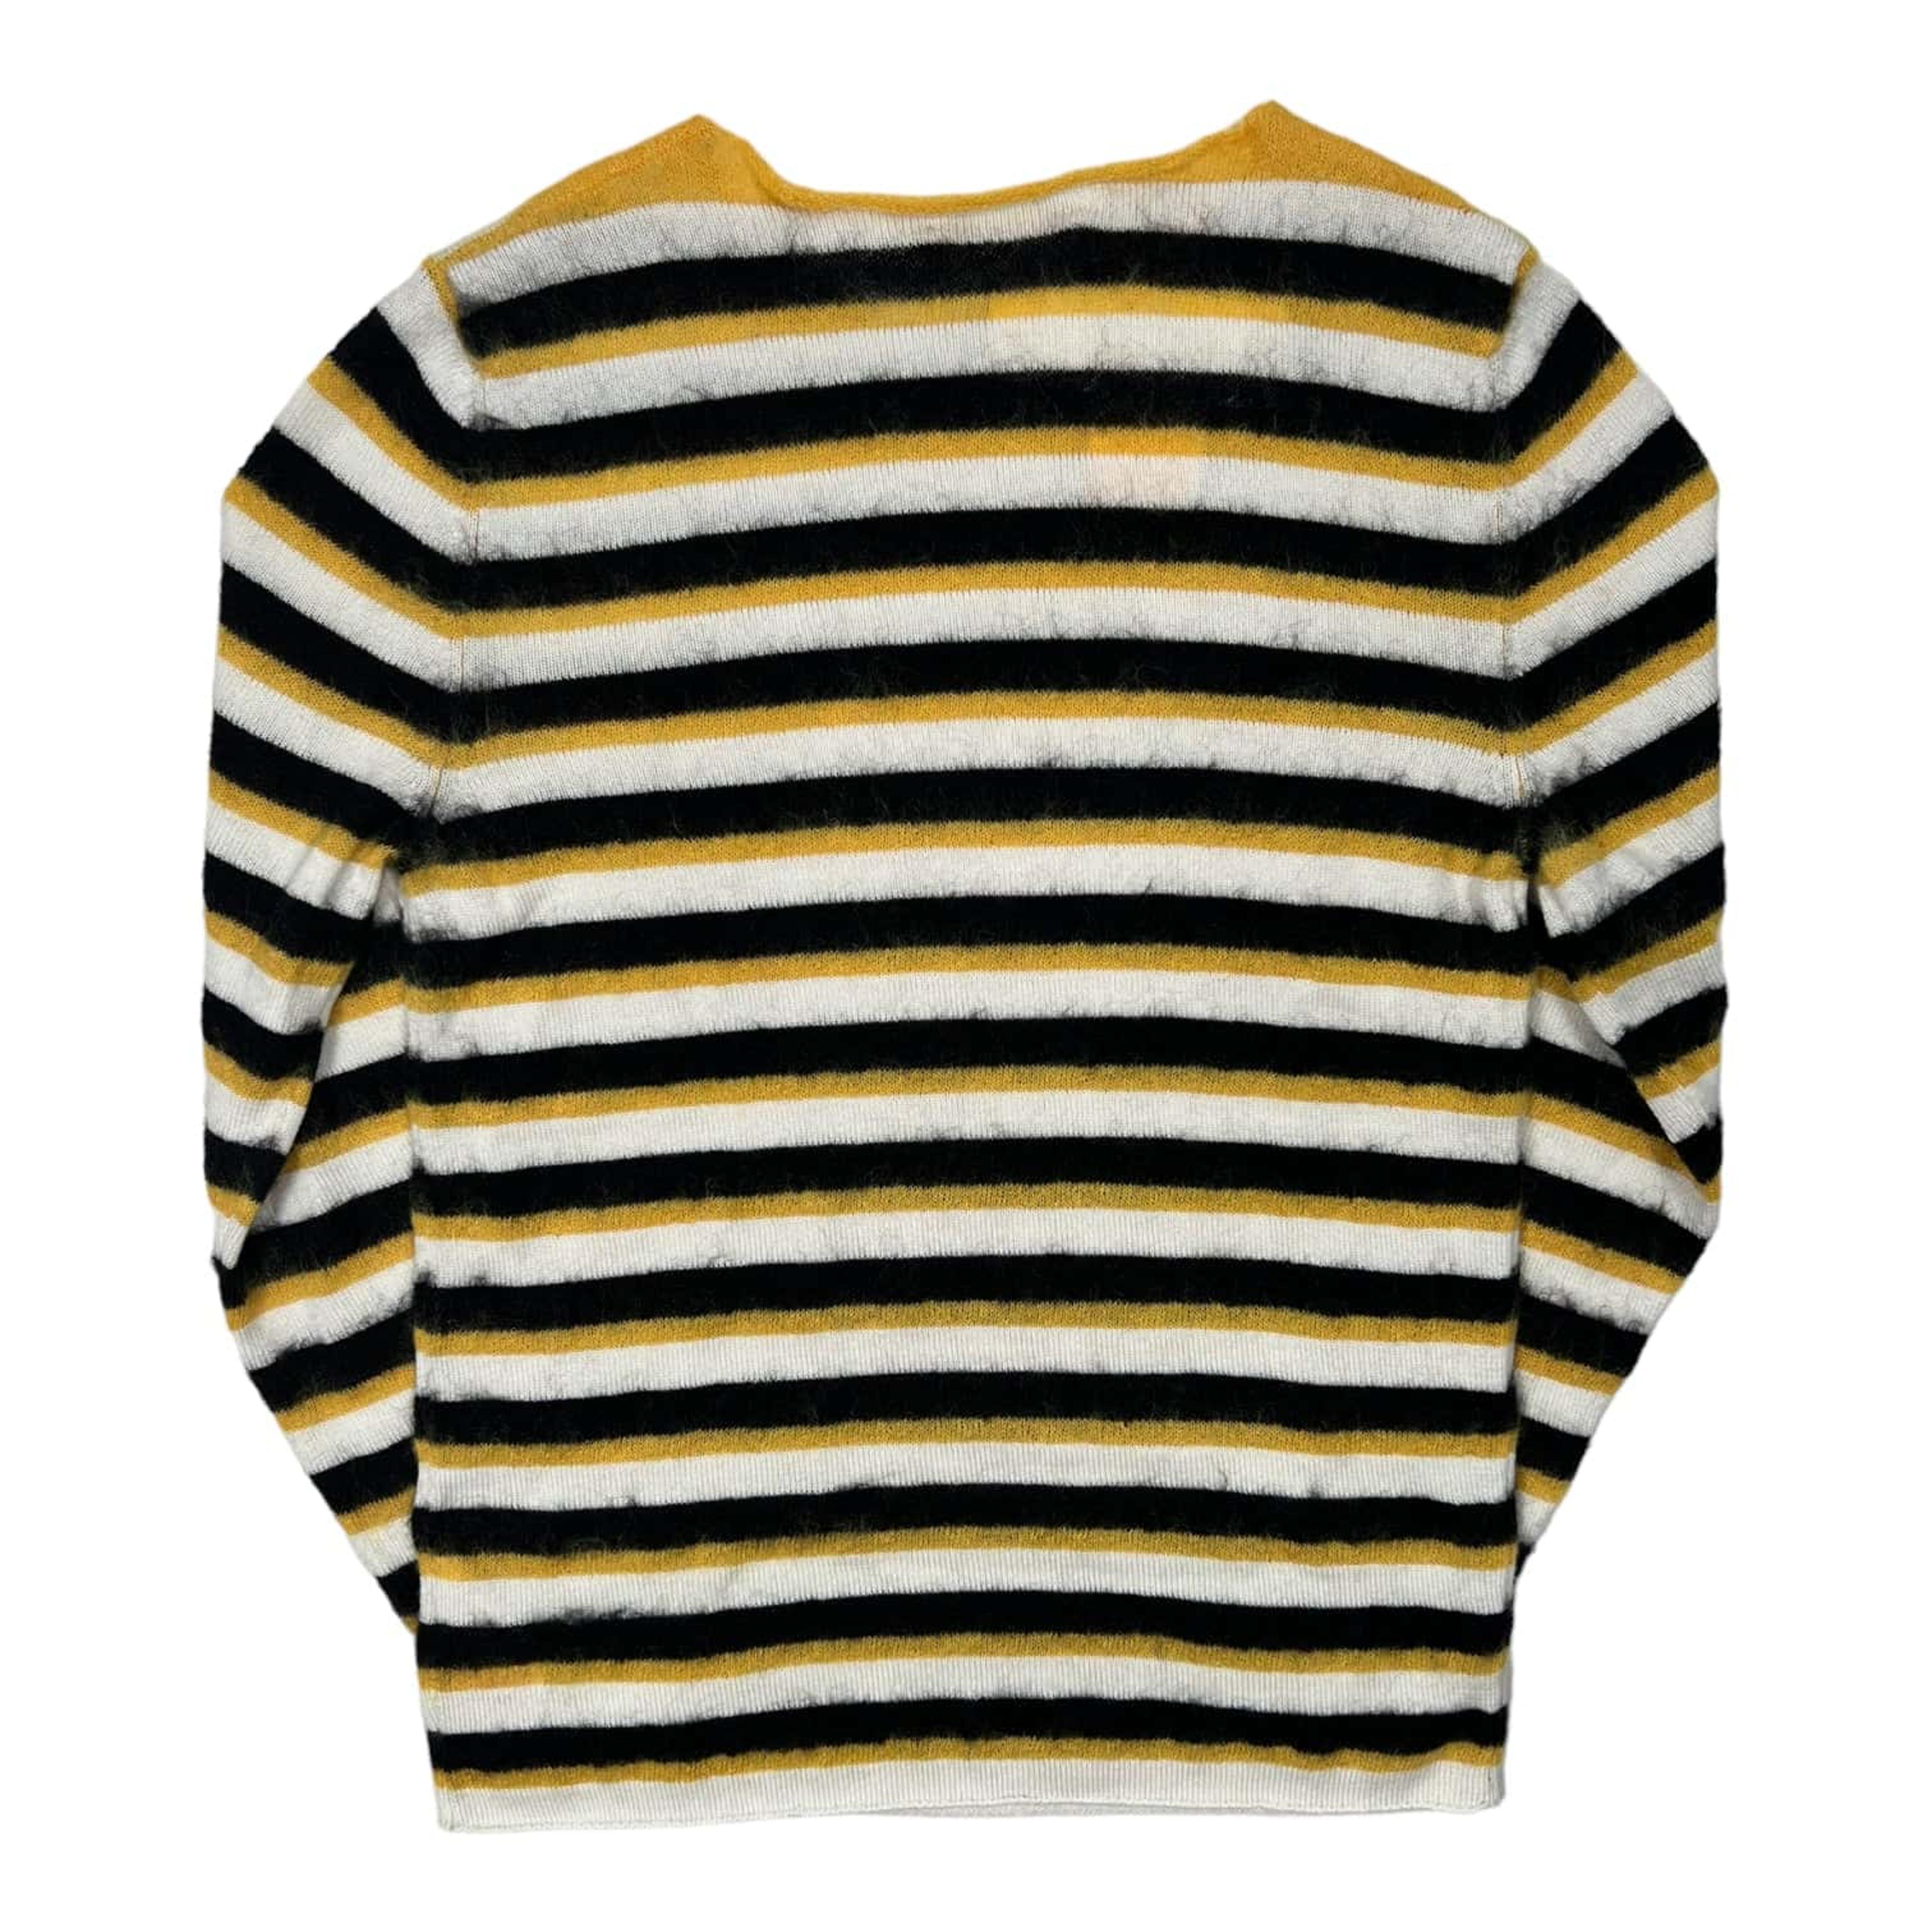 Alternate View 1 of Marni Striped Mohair Sweater Black Limestone